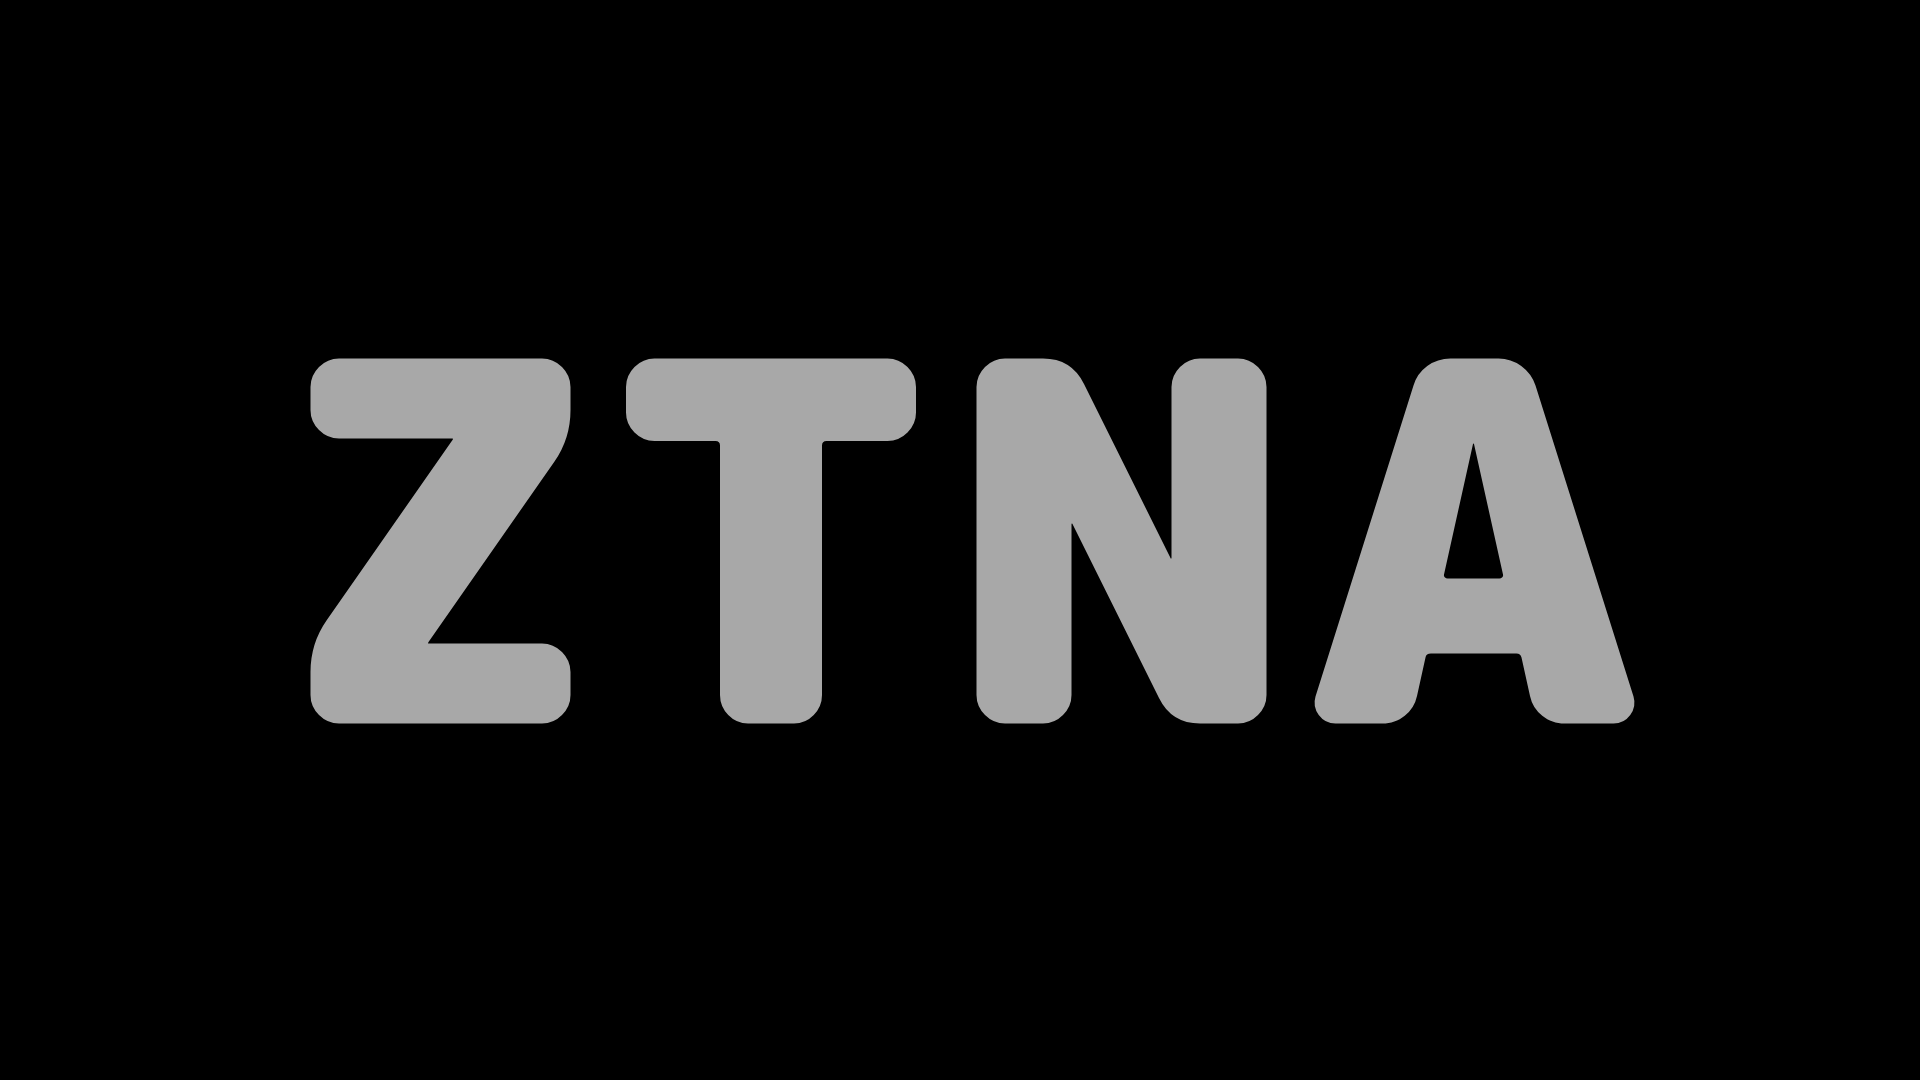 ZTNA Blog Post Cover Image